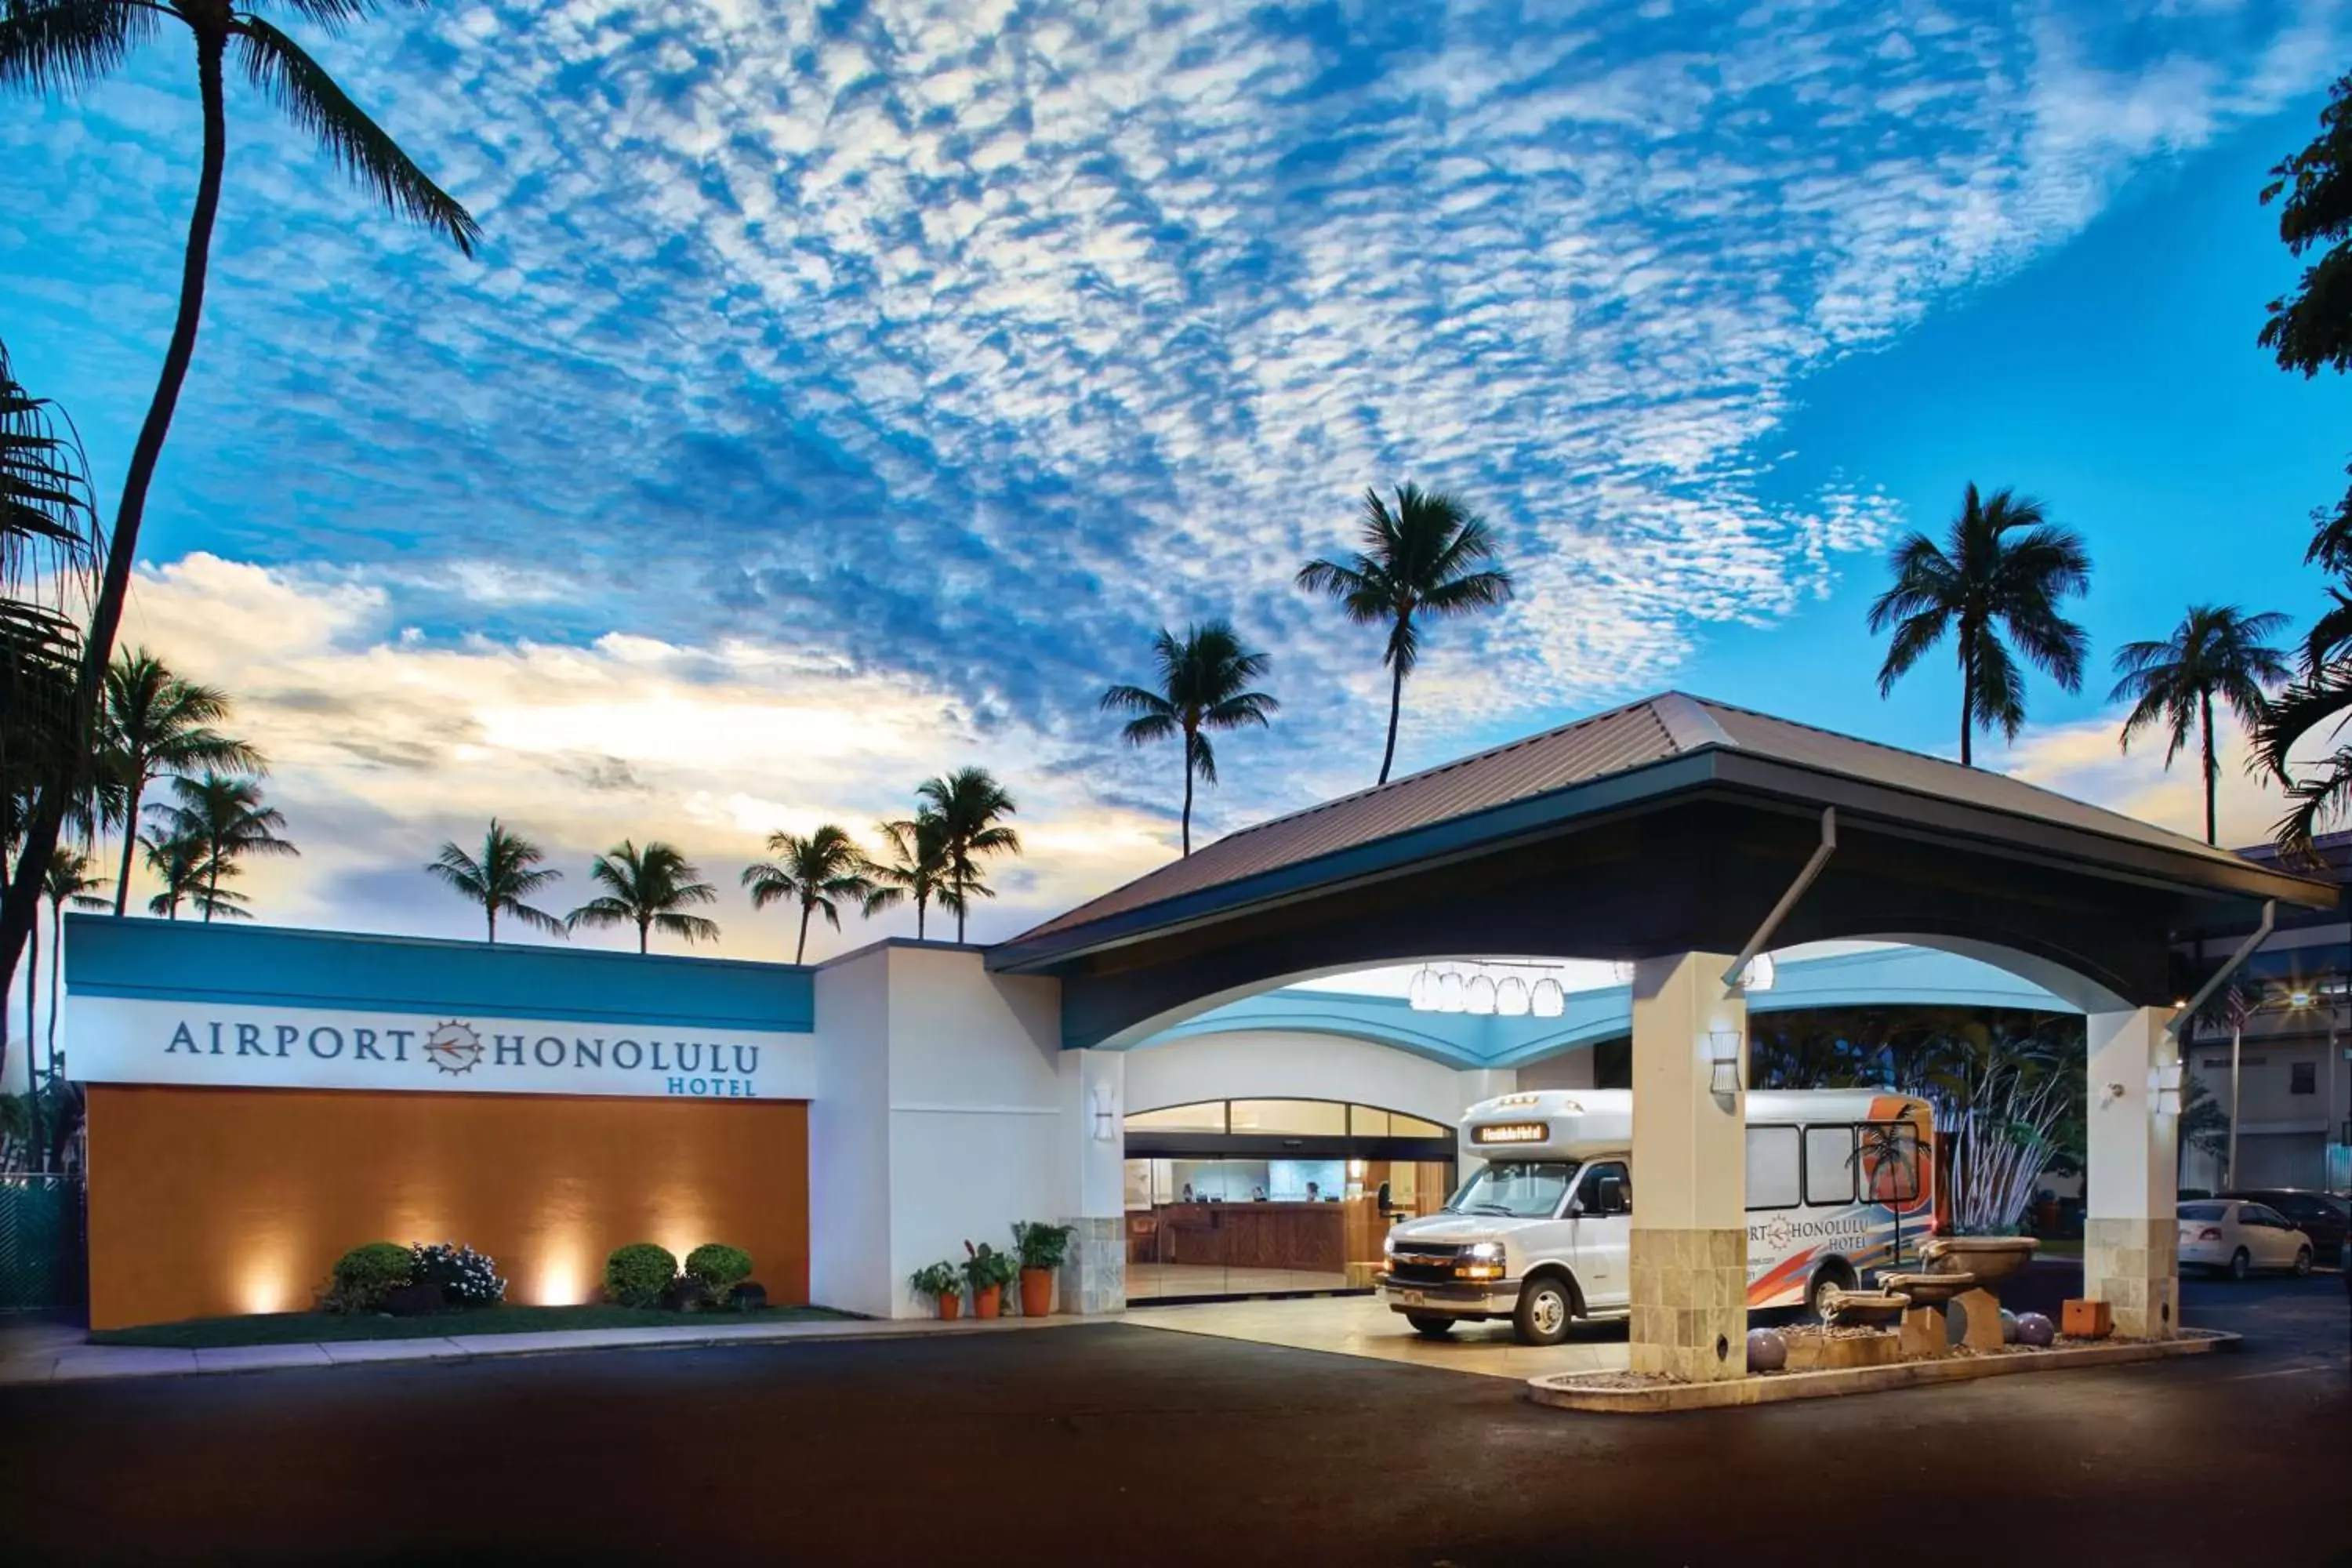 Property Building in Airport Honolulu Hotel